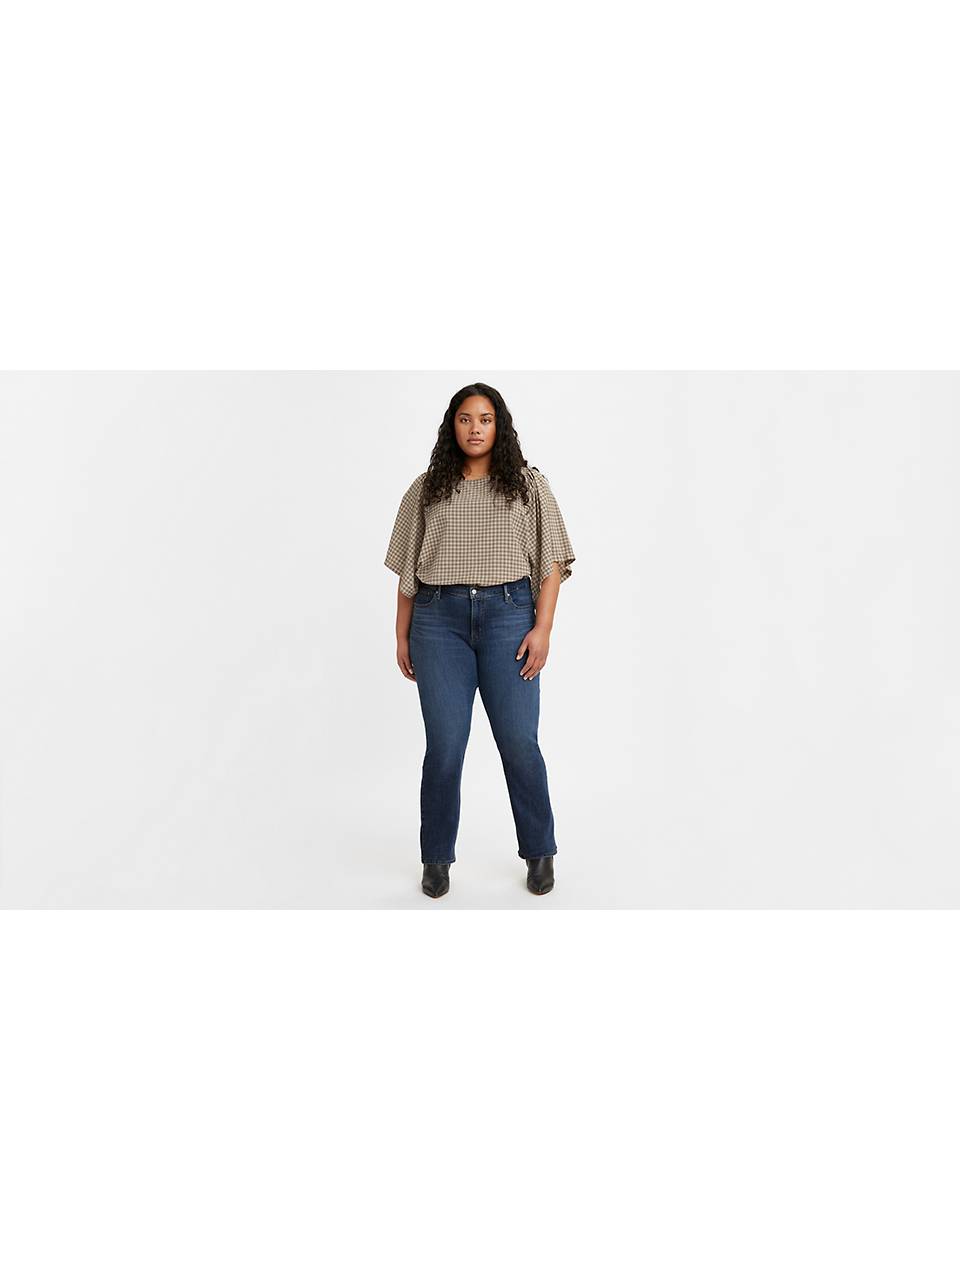 Plus Size Women's Clothing | Levi's® US